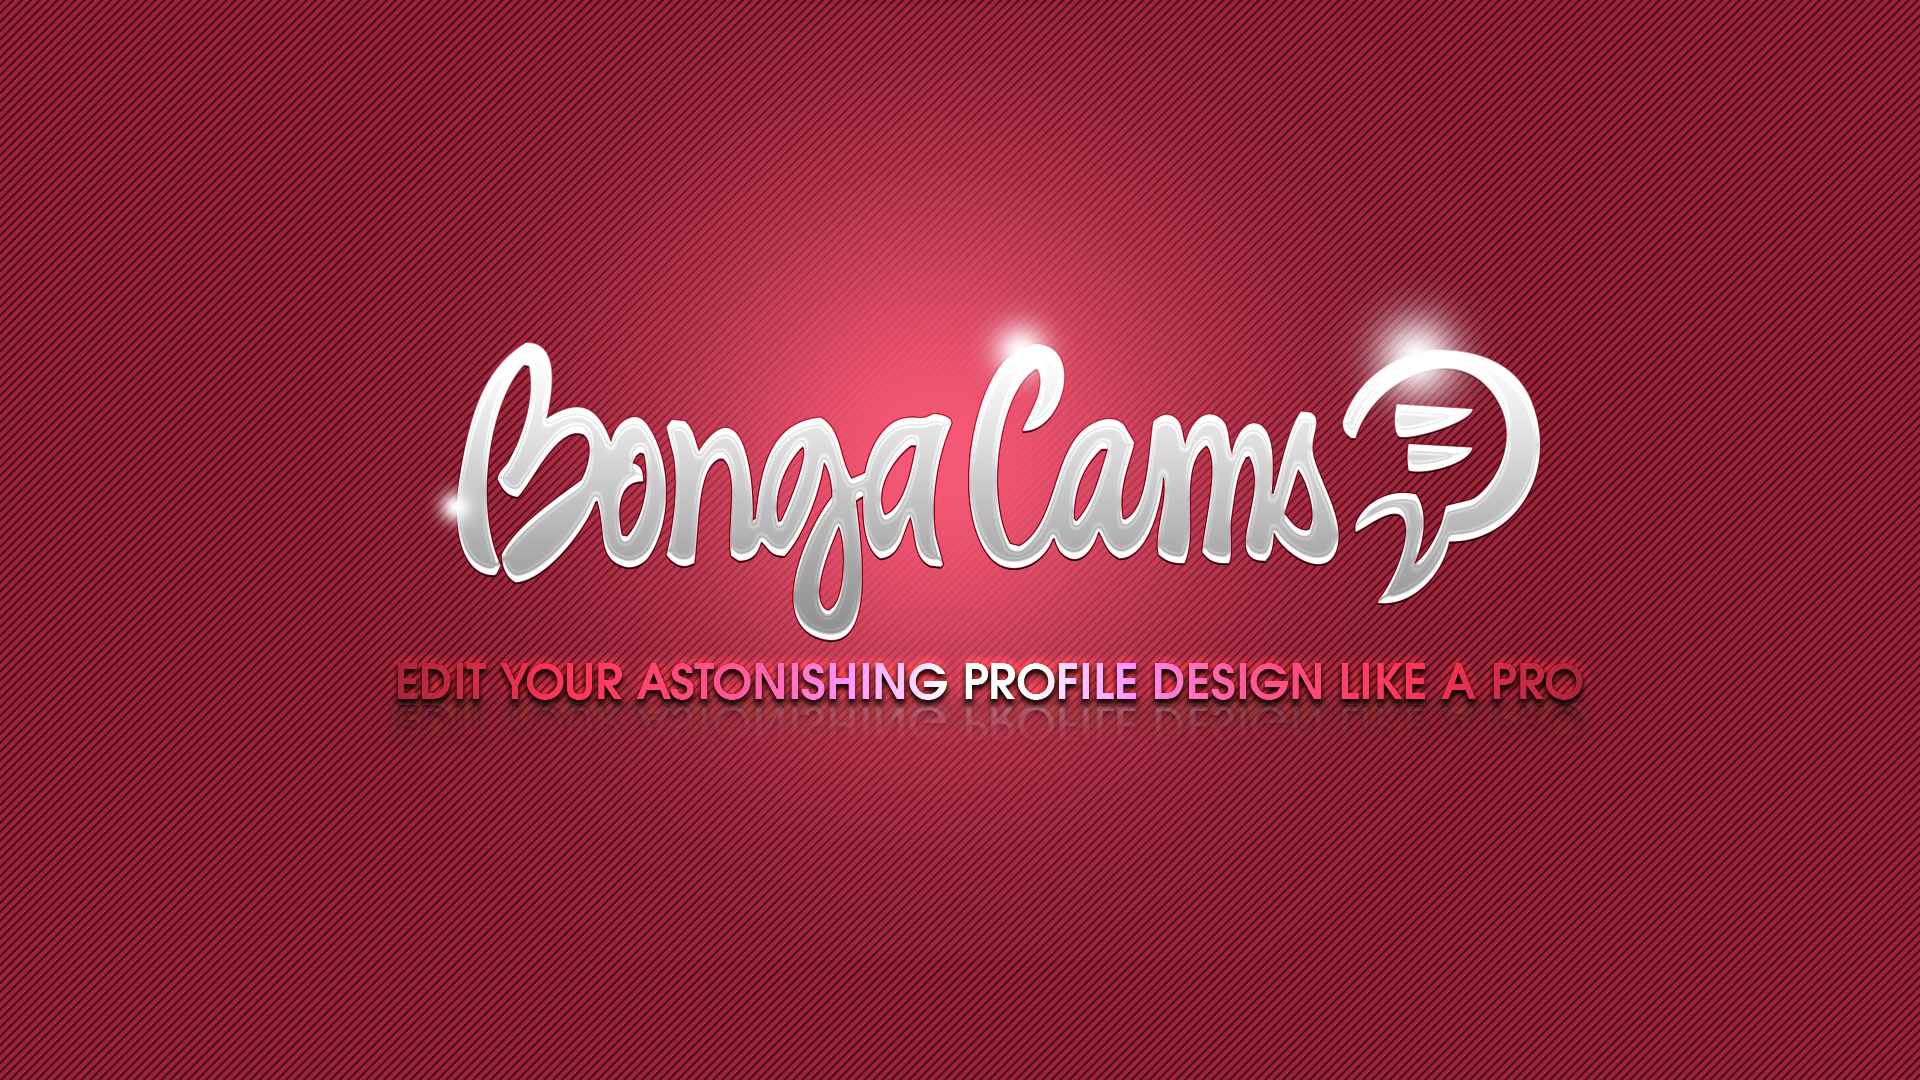 Bongacams kassablanca. Bongacams логотип. Бонгакамс логотип. Bongacams значок. Бонгакам видеореклама.